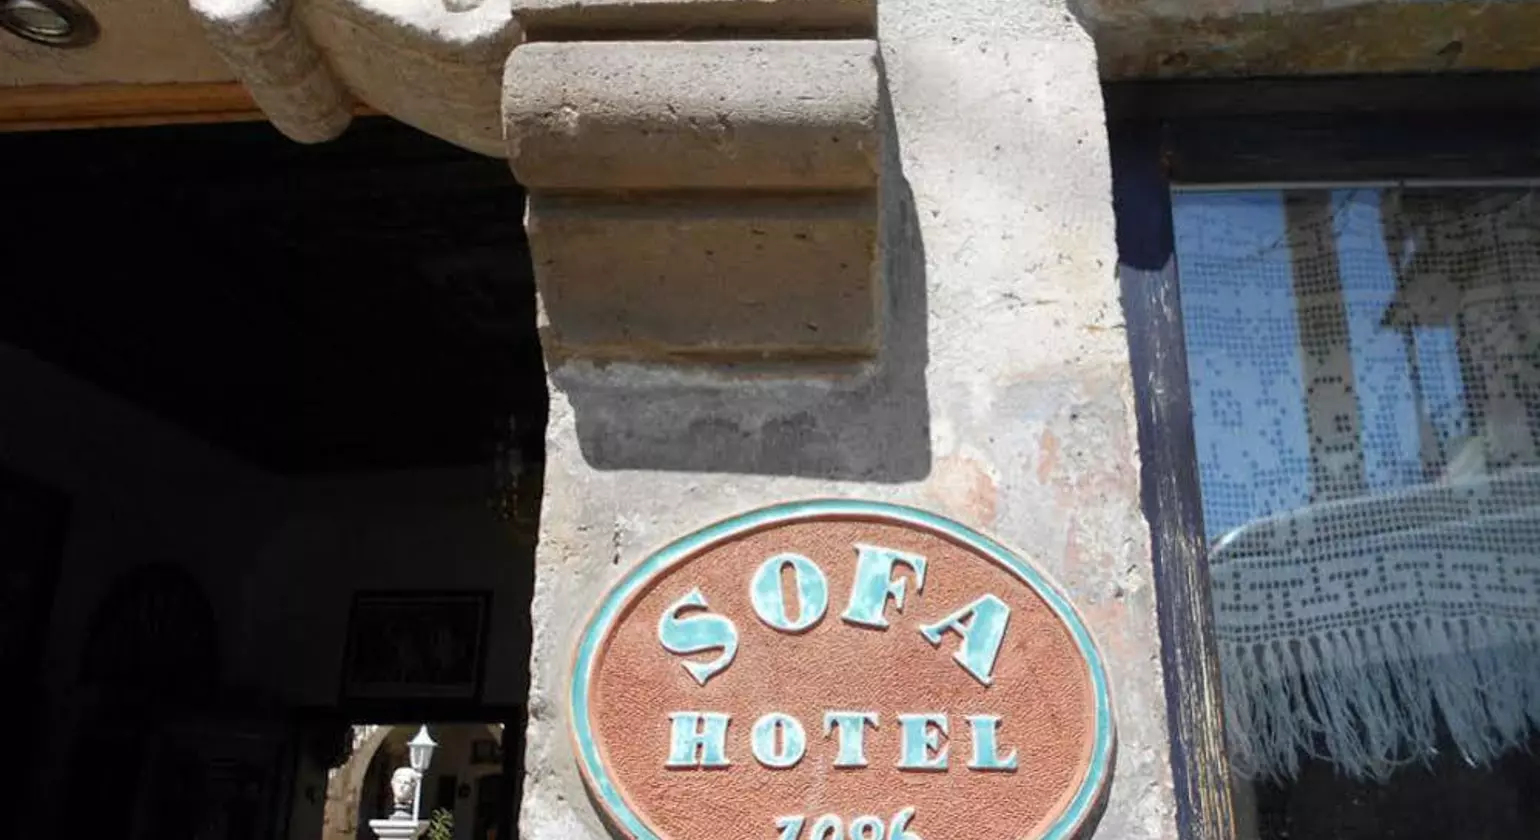 Sofa Hotel